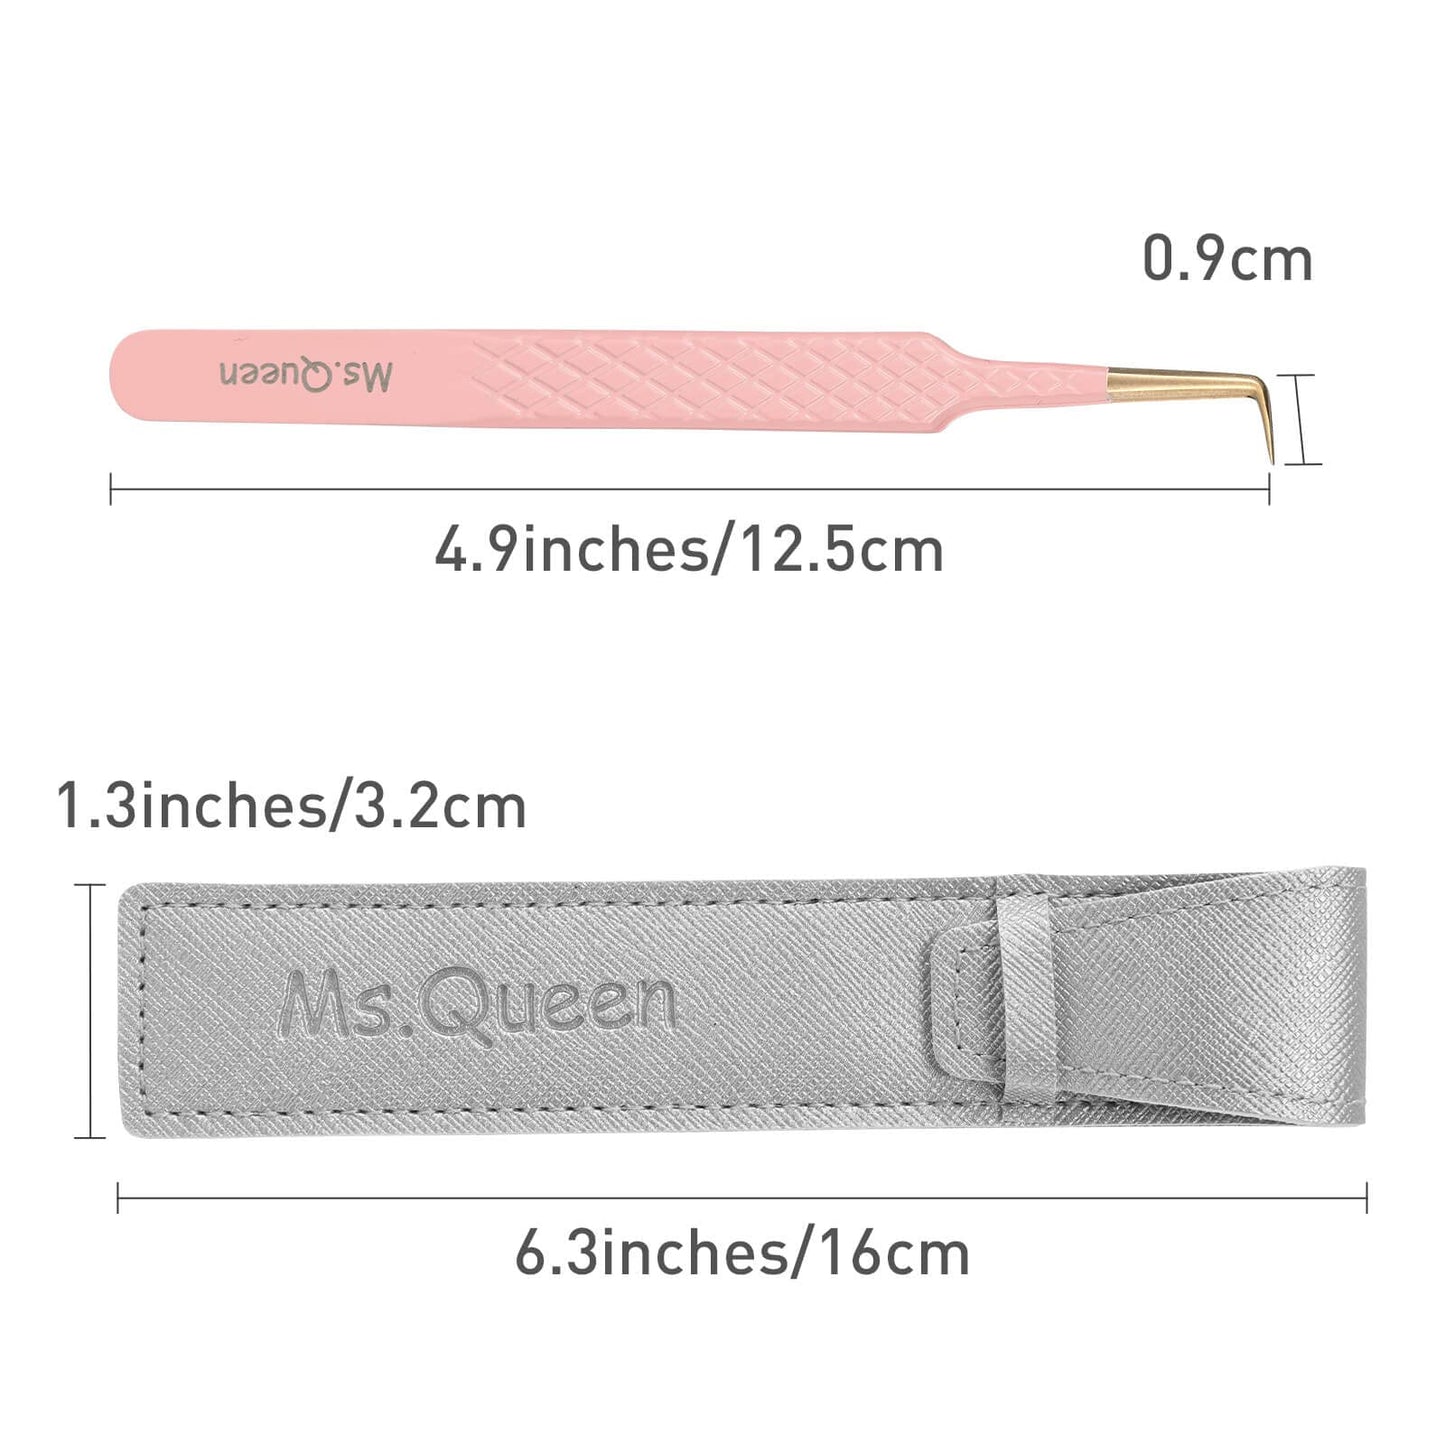 Ms.Queen 90 Degree Lash Tweezers for Eyelash Extensions, Precision Fiber Tip Grip Mega Volume Lash Tweezers